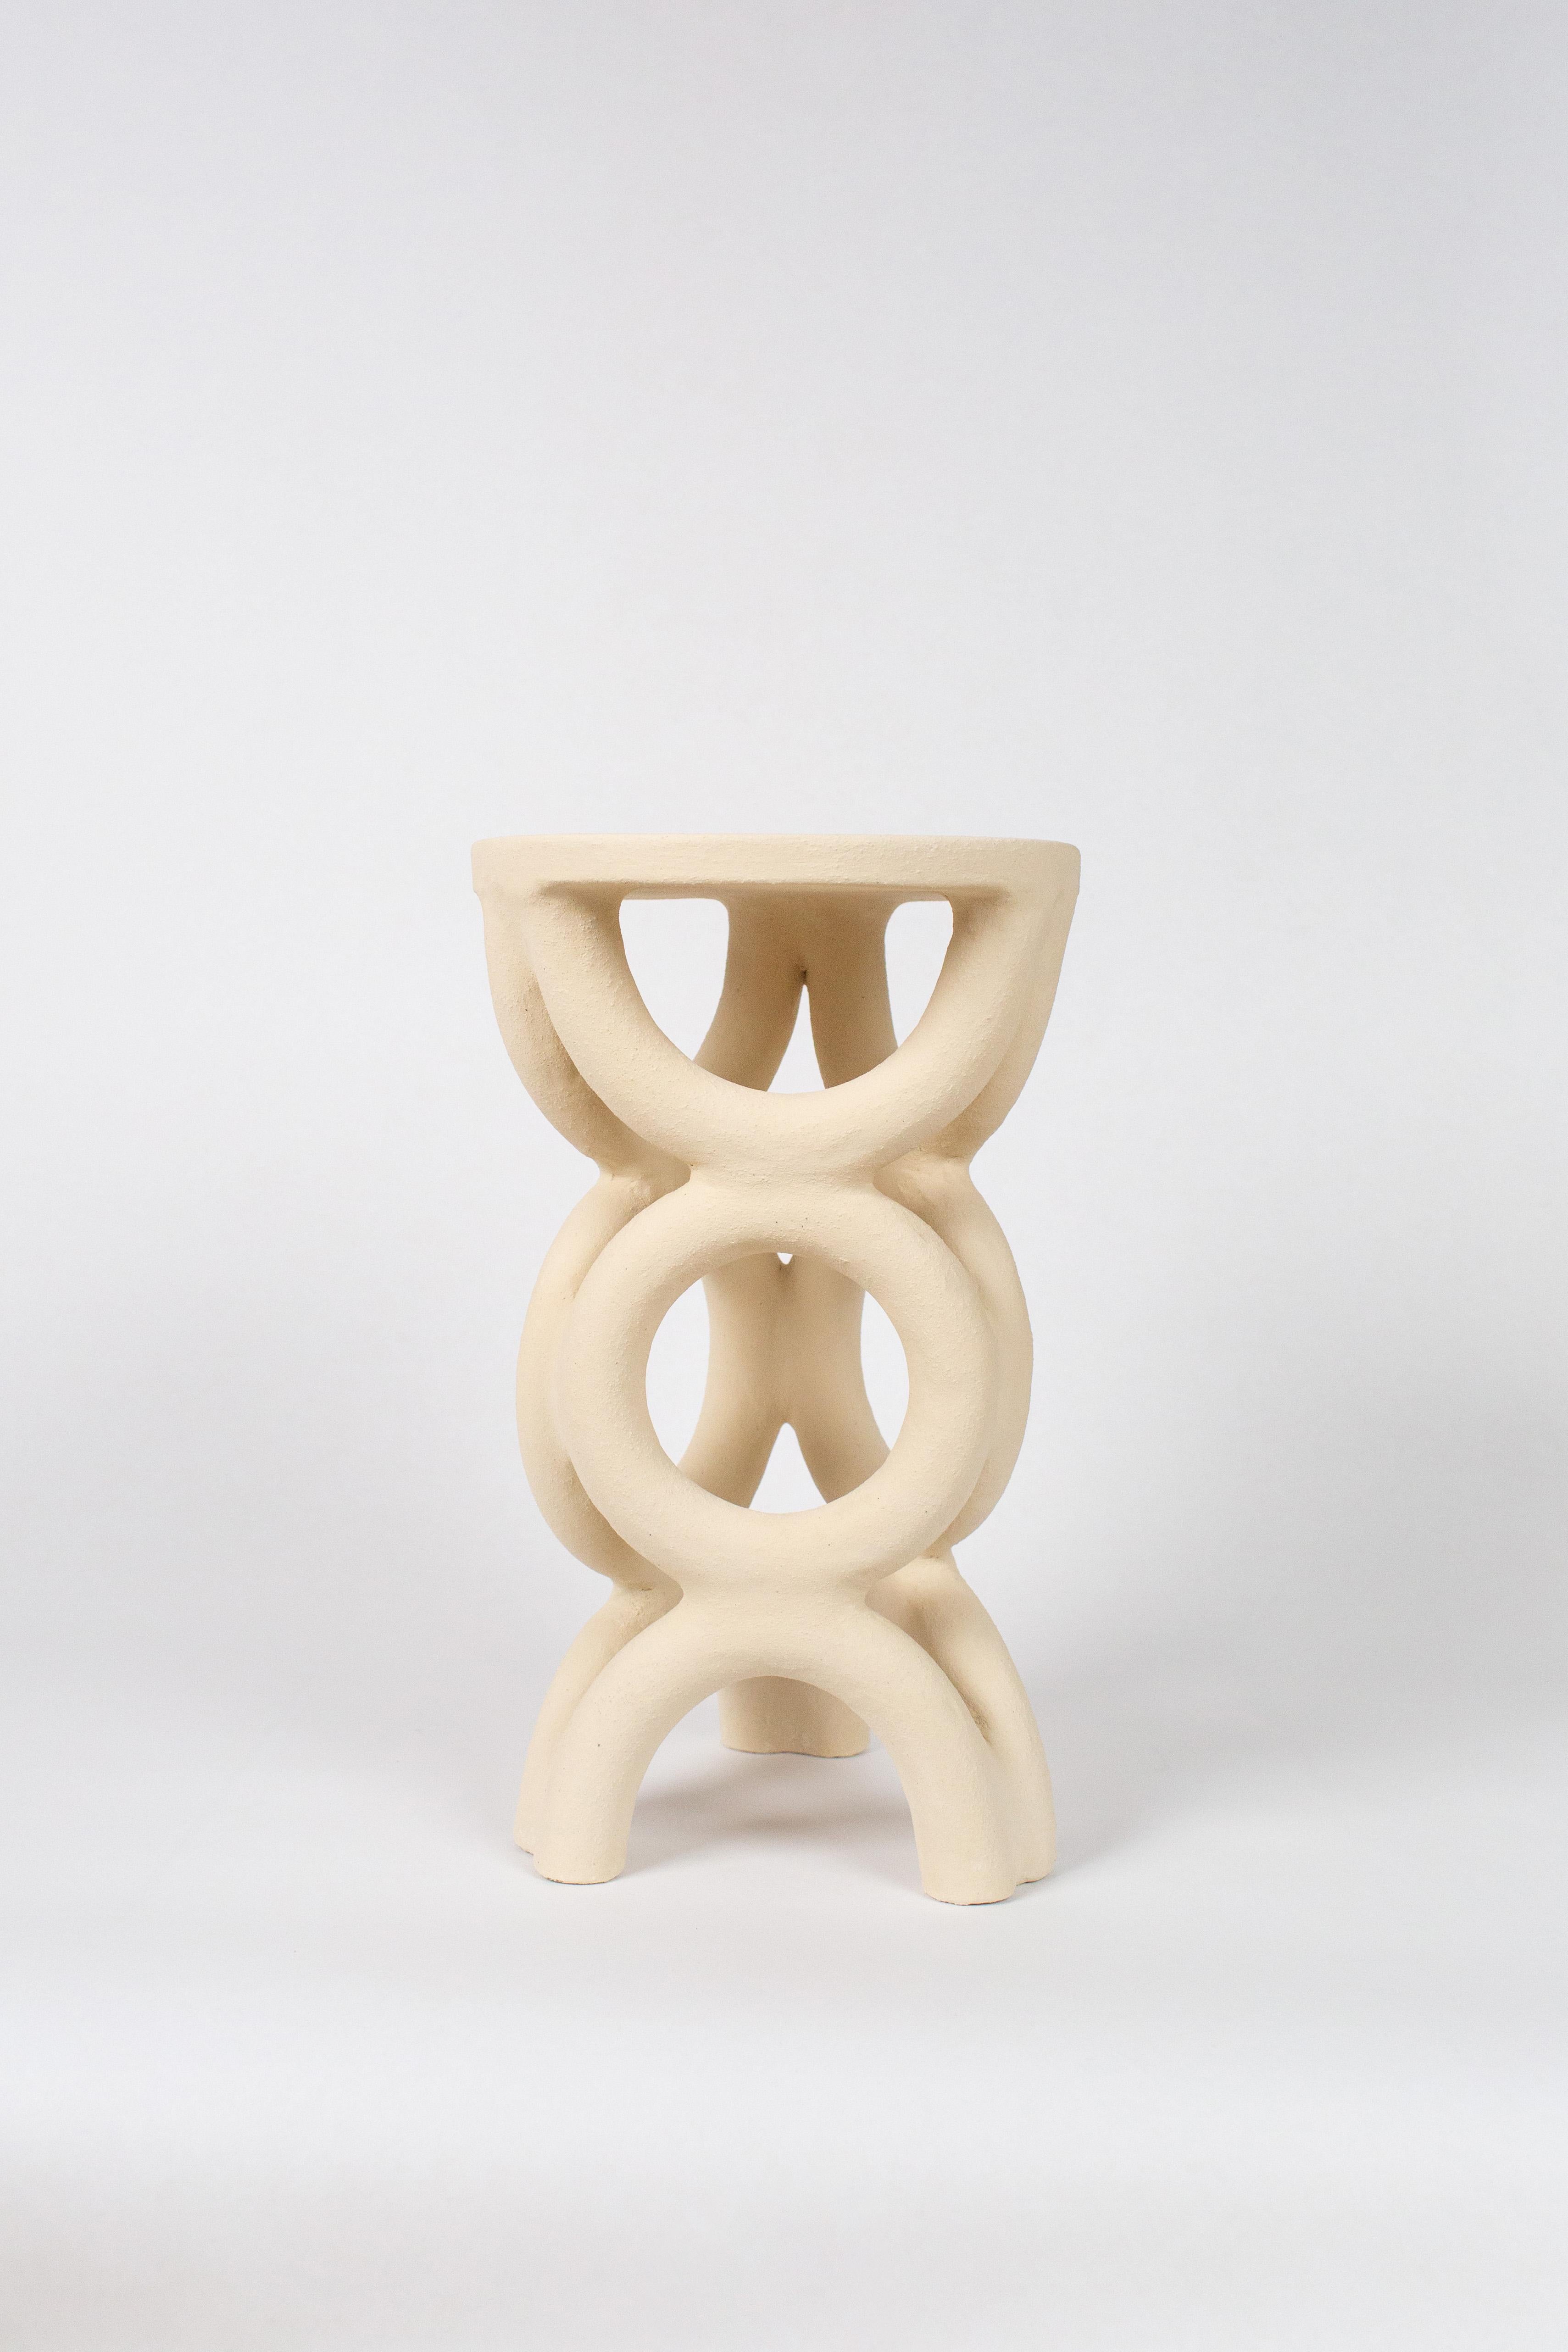 Unique arch circular white stool by Mesut Öztürk
Dimensions:  W 26 x D 26 x H 41 cm
Materials: Stoneware 

